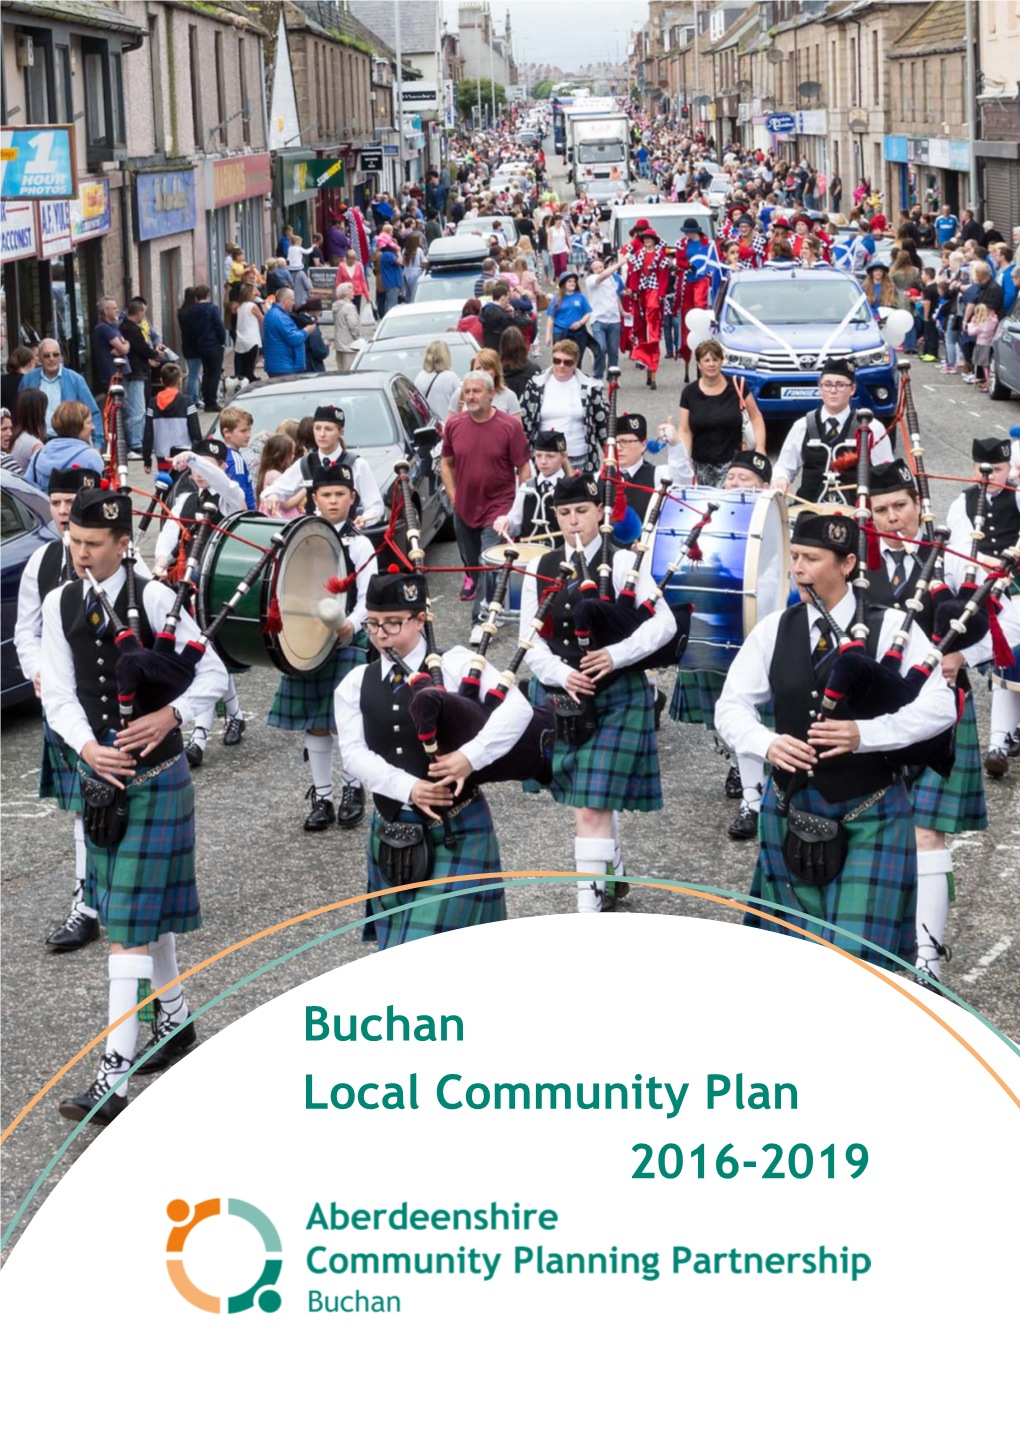 Buchan Local Community Plan 2016-2019